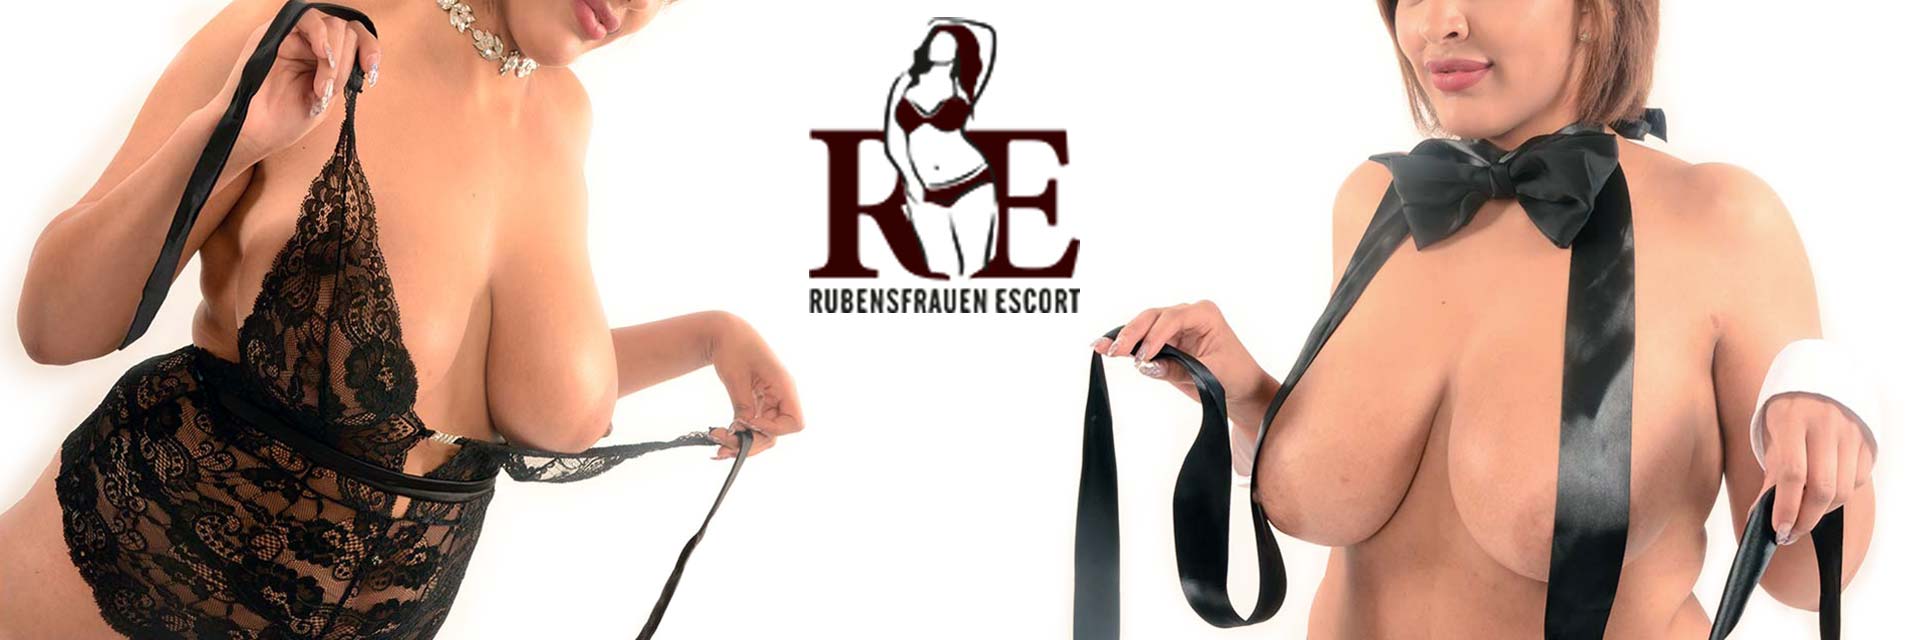 Rubensfrauen Escort - mollige Escorts aus Bielefeld